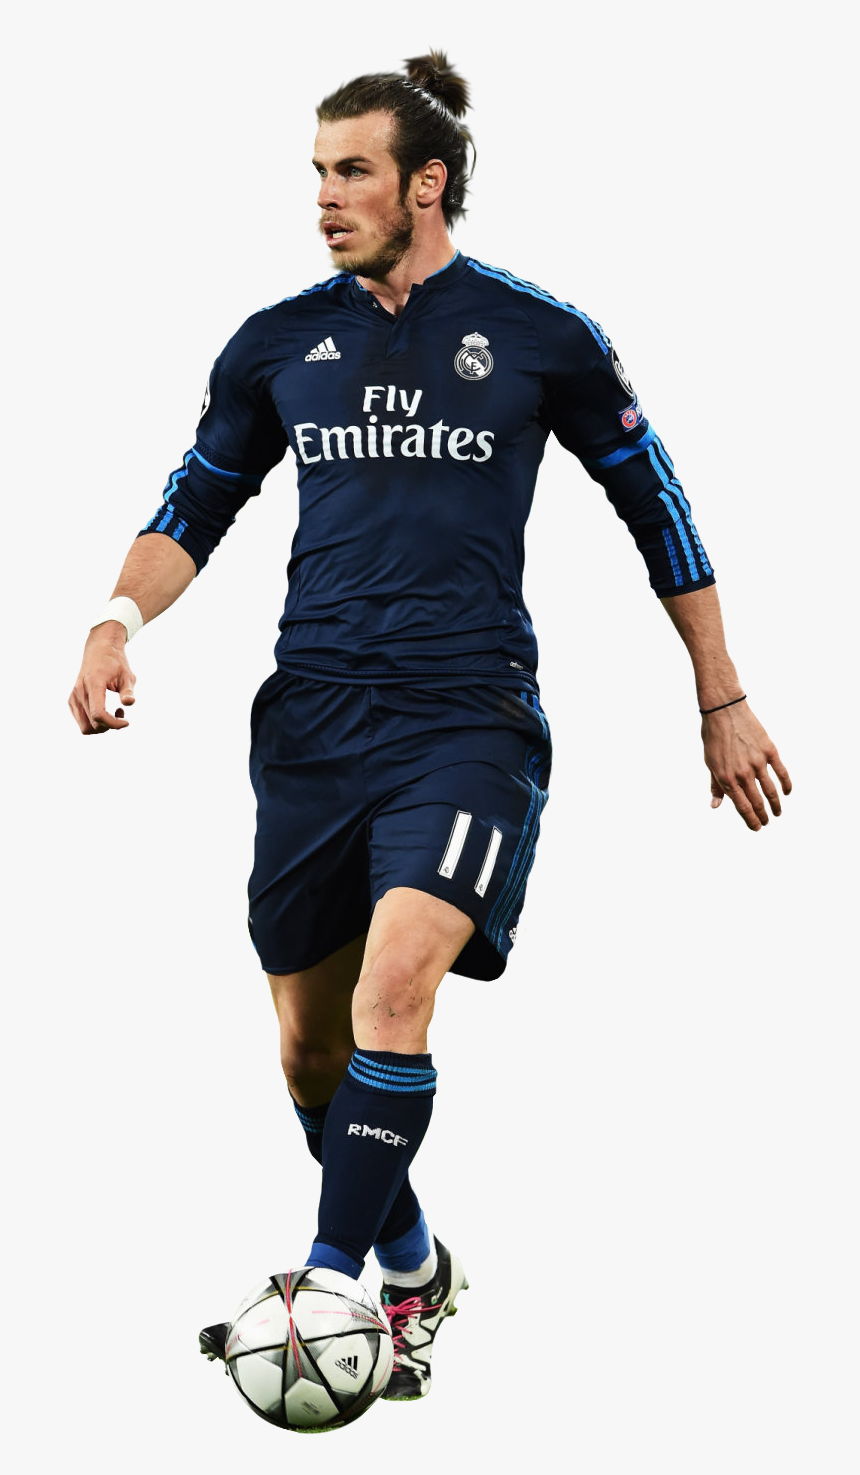 Gareth Bale Render - Gareth Bale Render Png, Transparent Png, Free Download